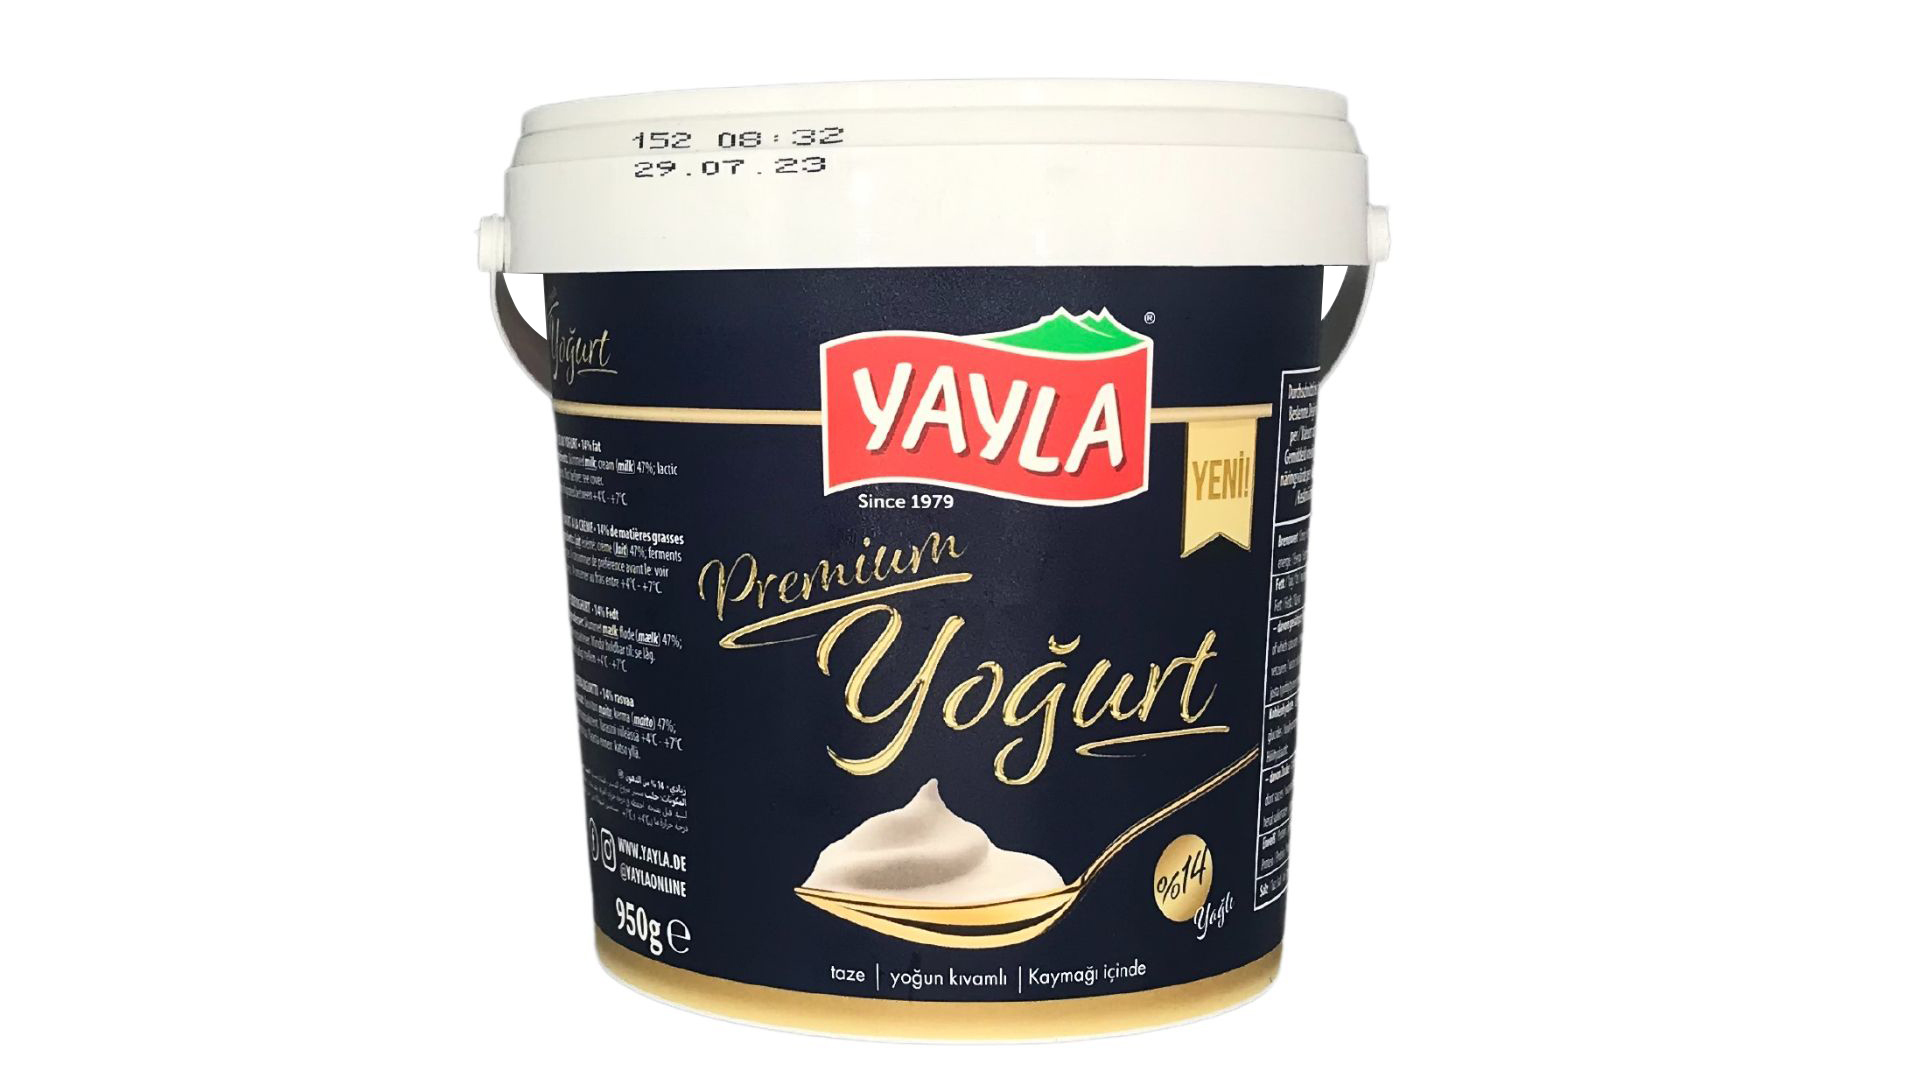 Yayla Premium Yoghurt 950g 1